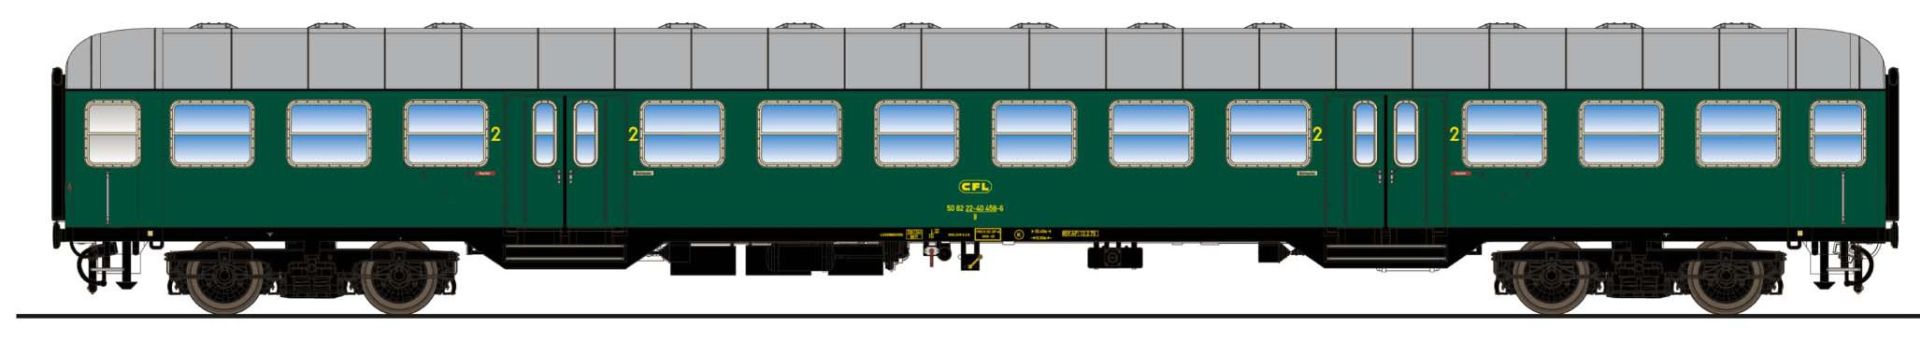 ESU 36060 - Personenwagen 'Silberling' B 82 22-40 458, CDL, Ep.IV